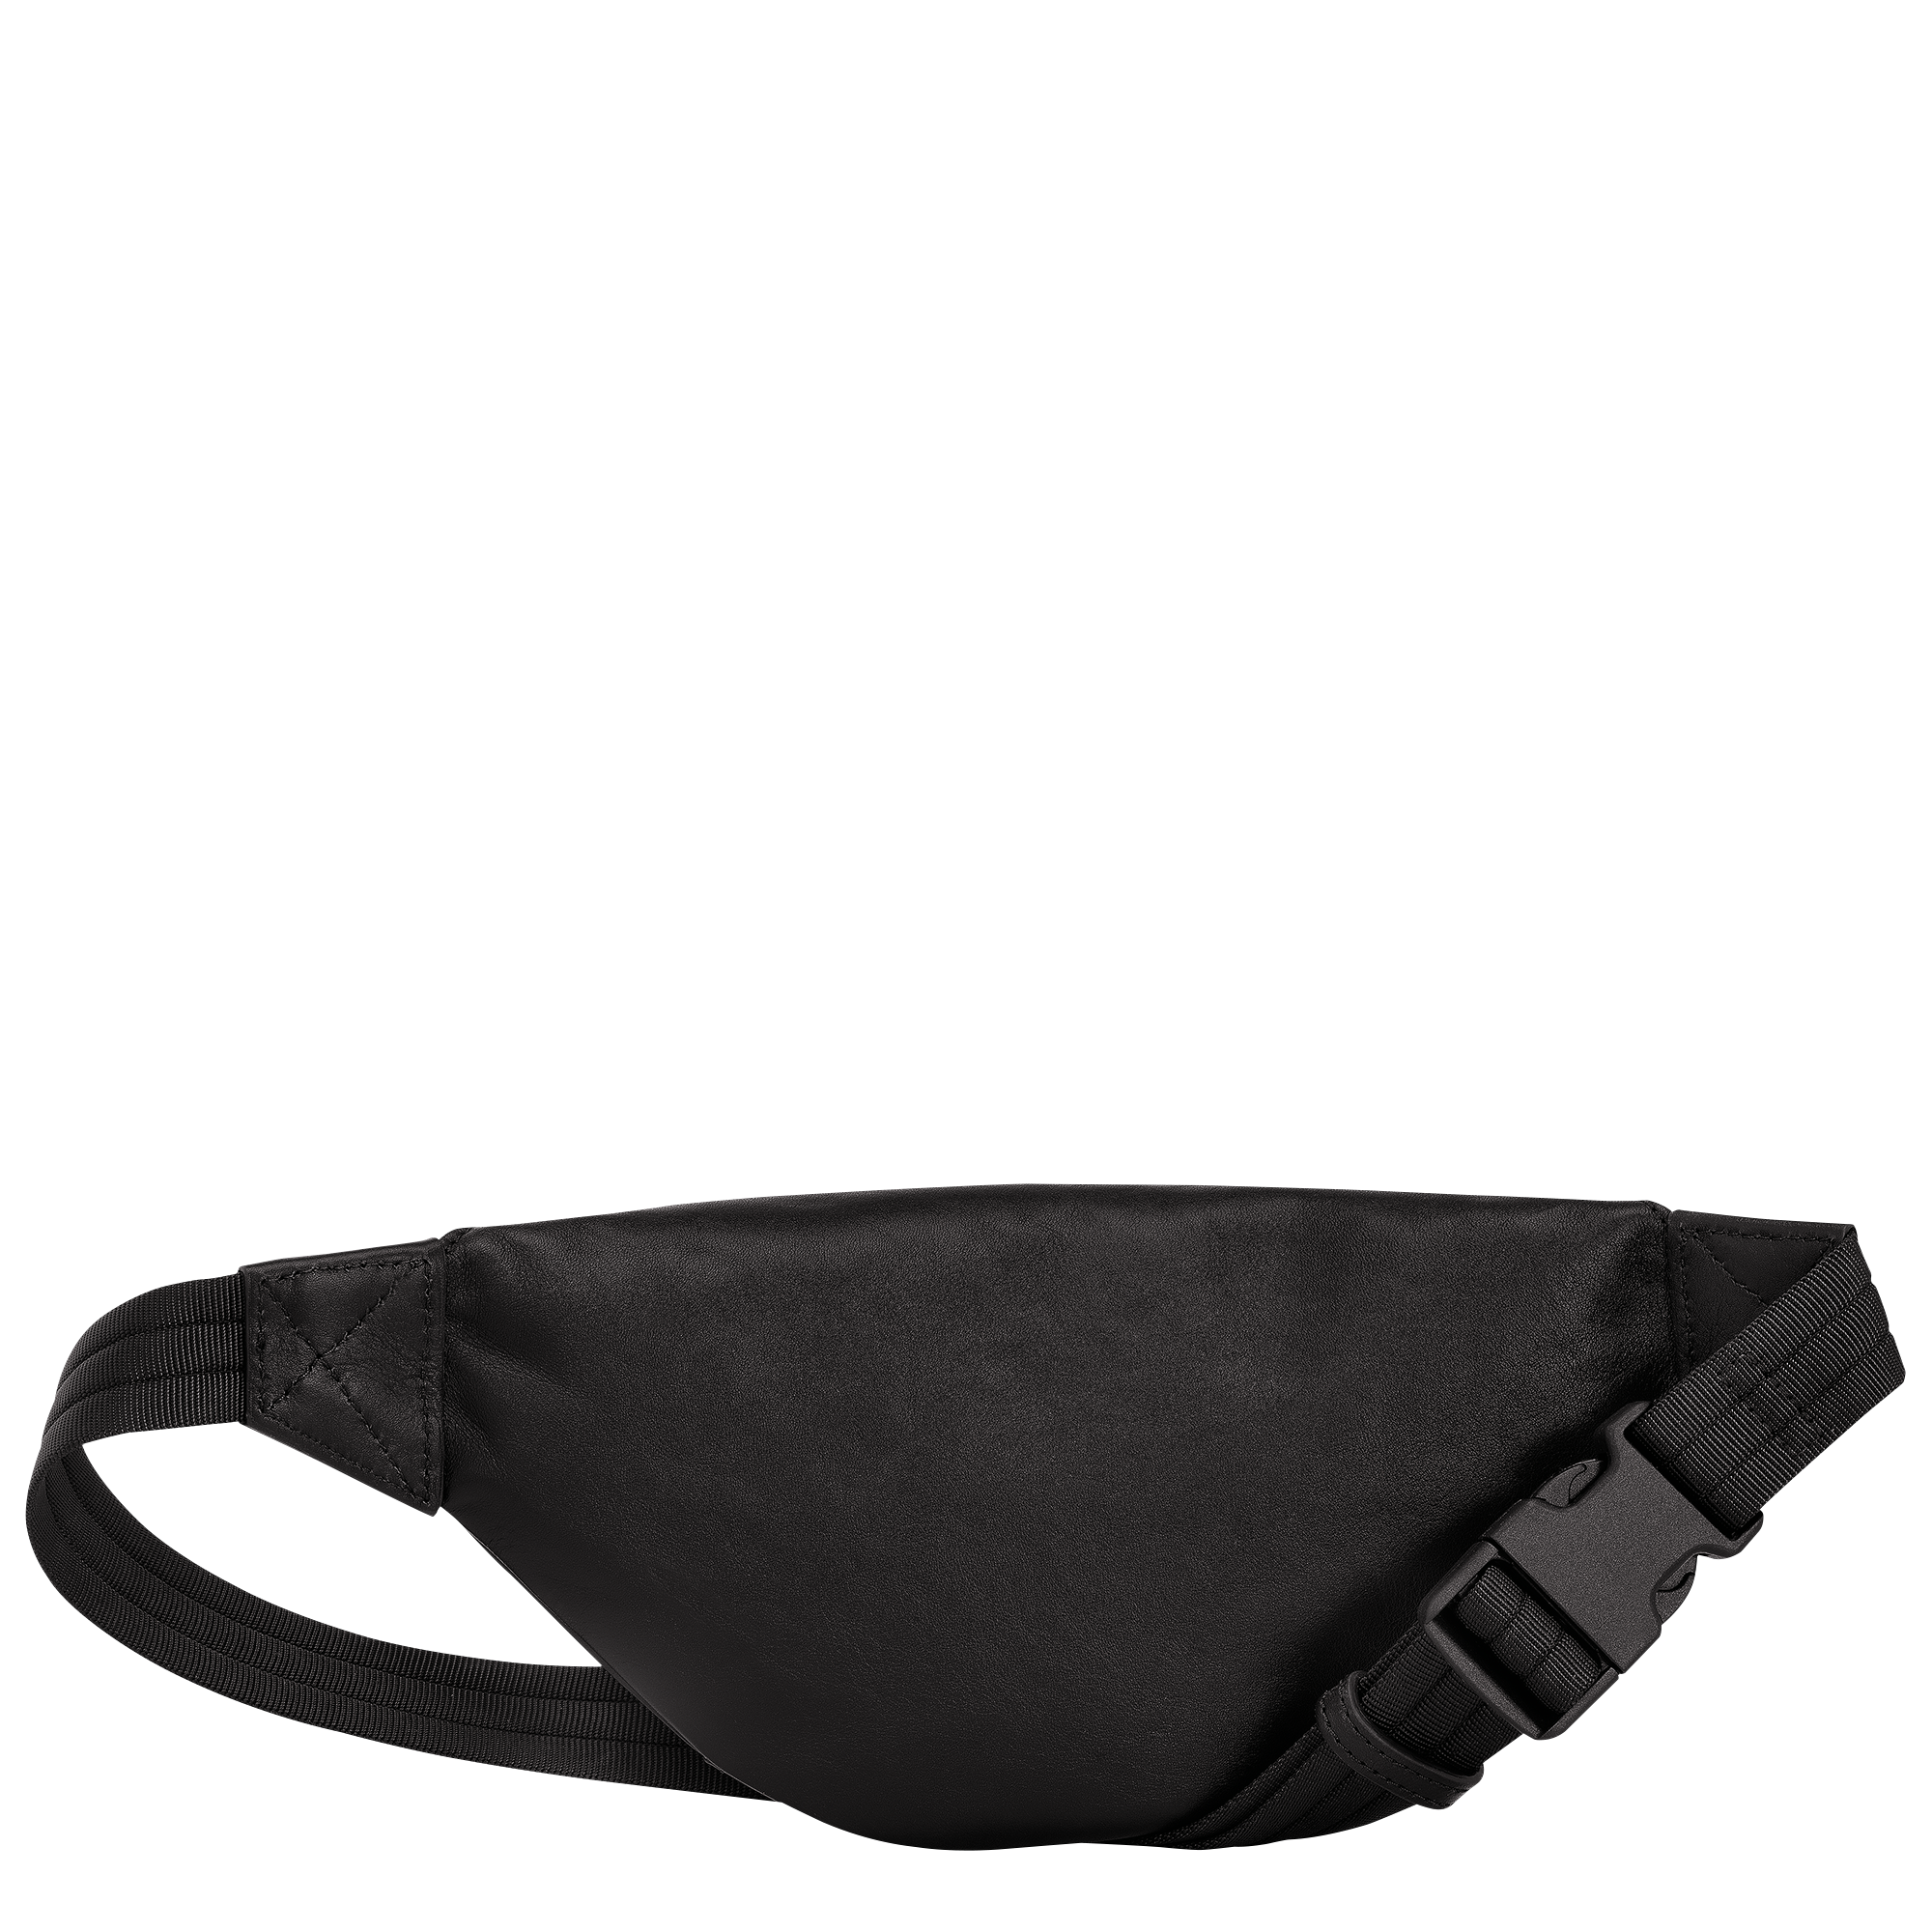 Longchamp 3D Belt bag S, Black